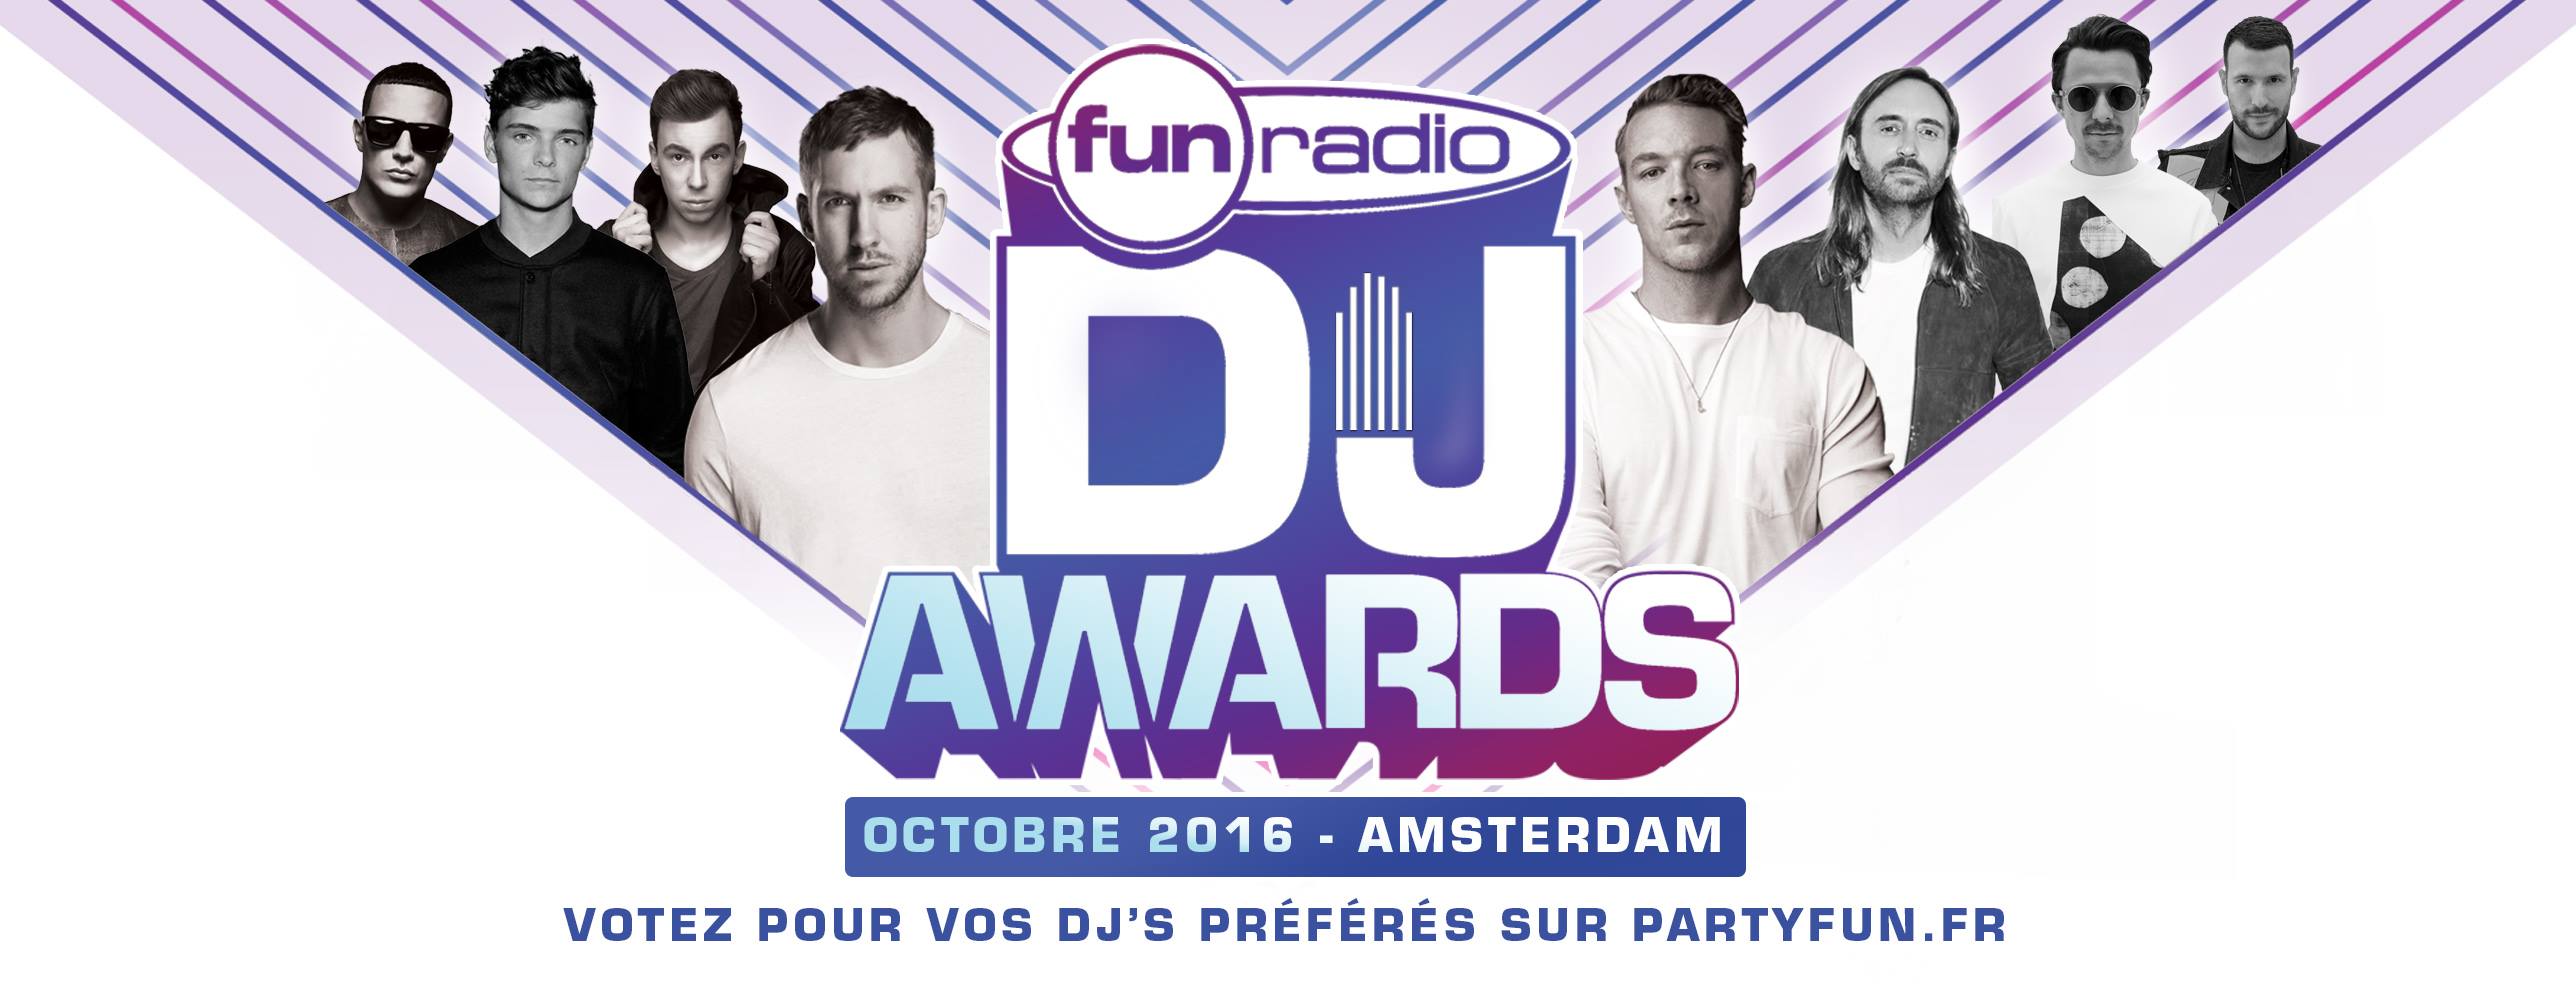 Fun Radio DJ Awards 2016 : tous les DJs en compétition